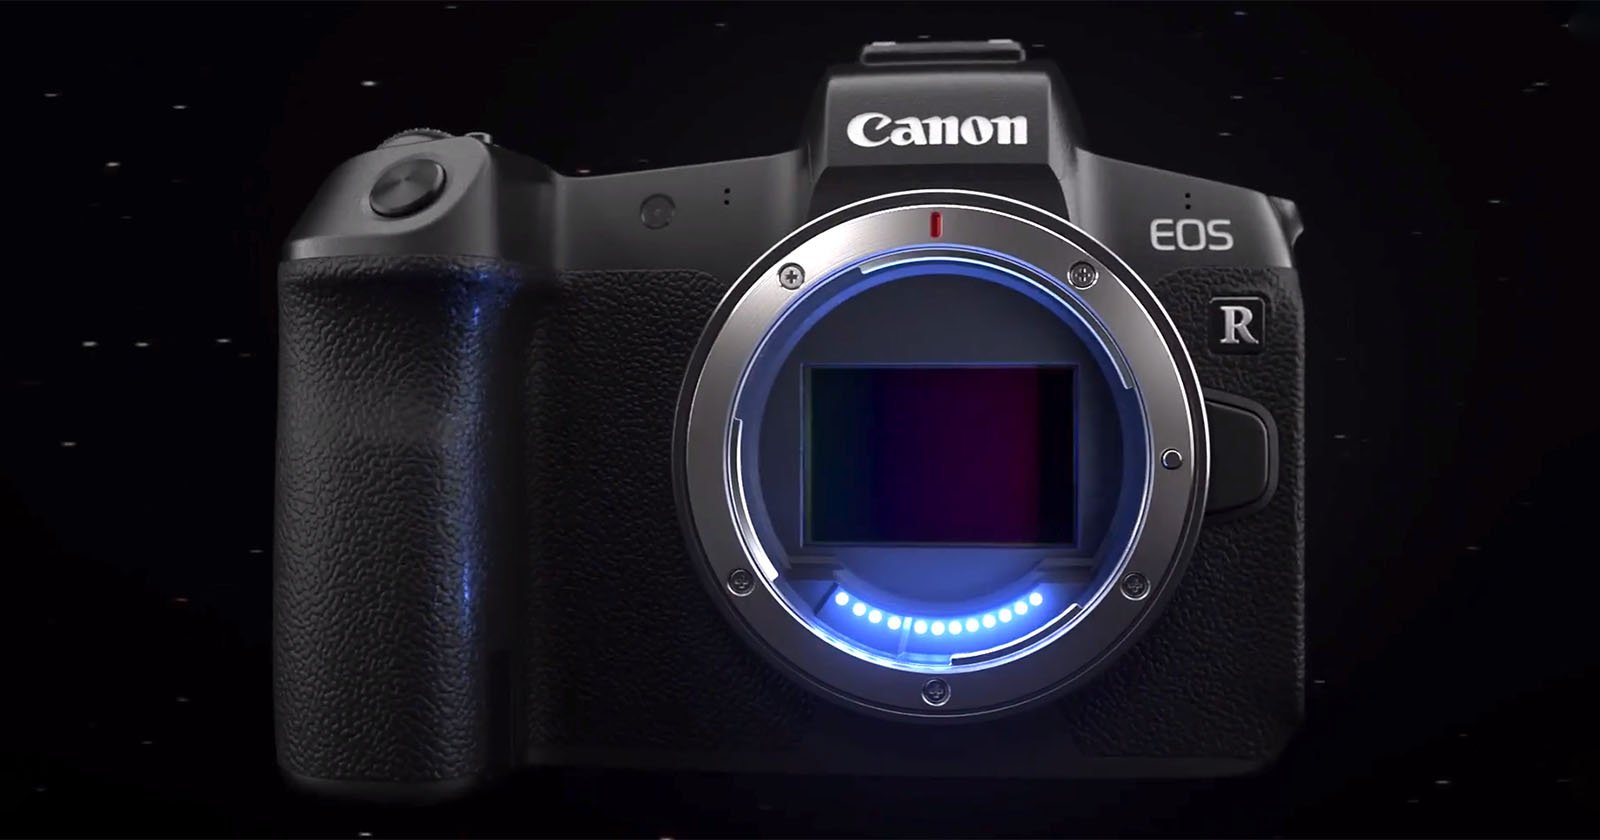 canon frame cameras list 2016